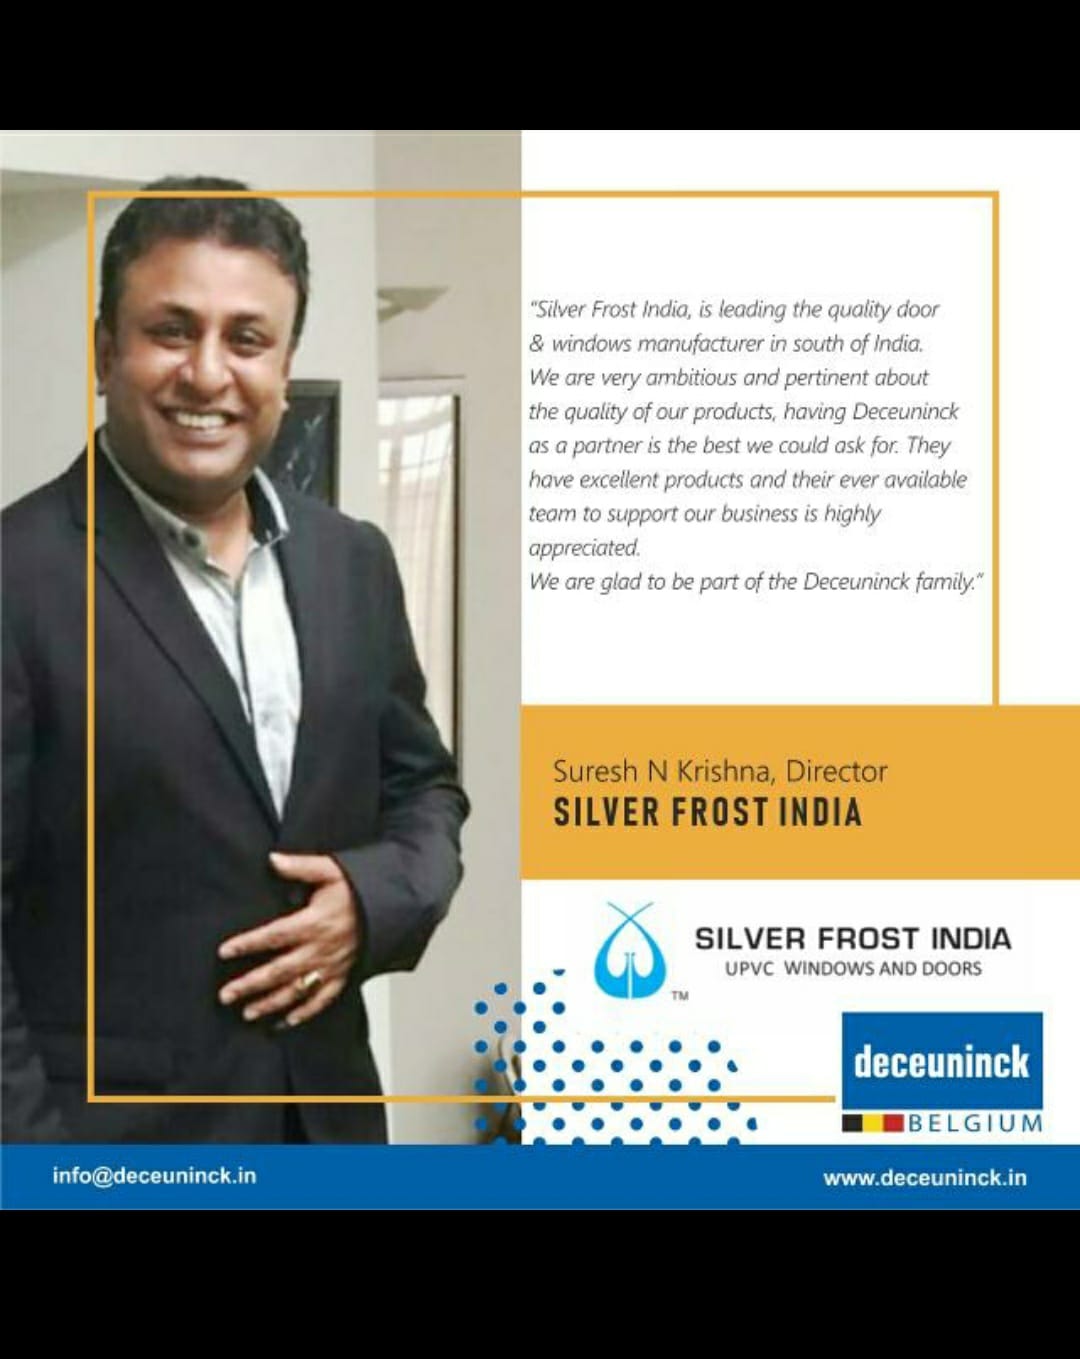 Mr. Suresh Krishna, Director - UPVC fabricator (Silverfrost India)